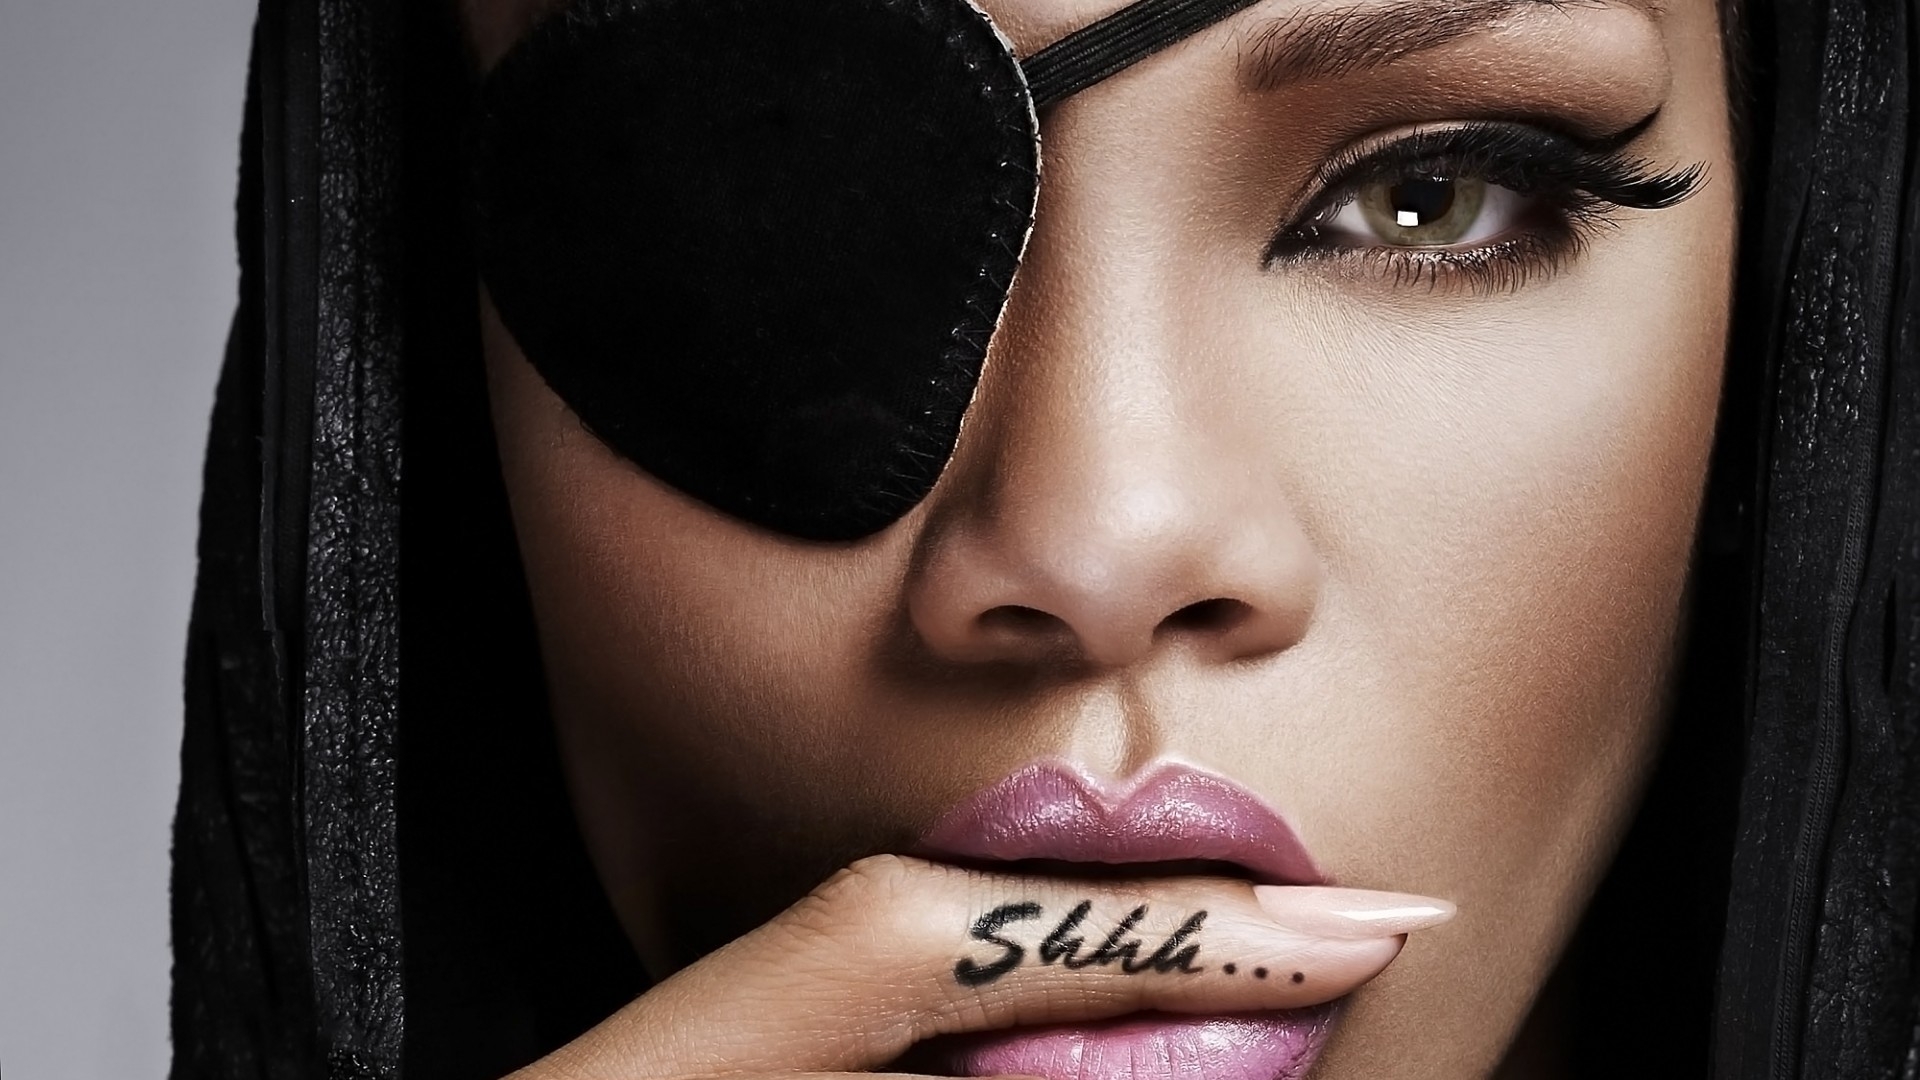 Rihanna Shhh Tattoo for 1920 x 1080 HDTV 1080p resolution